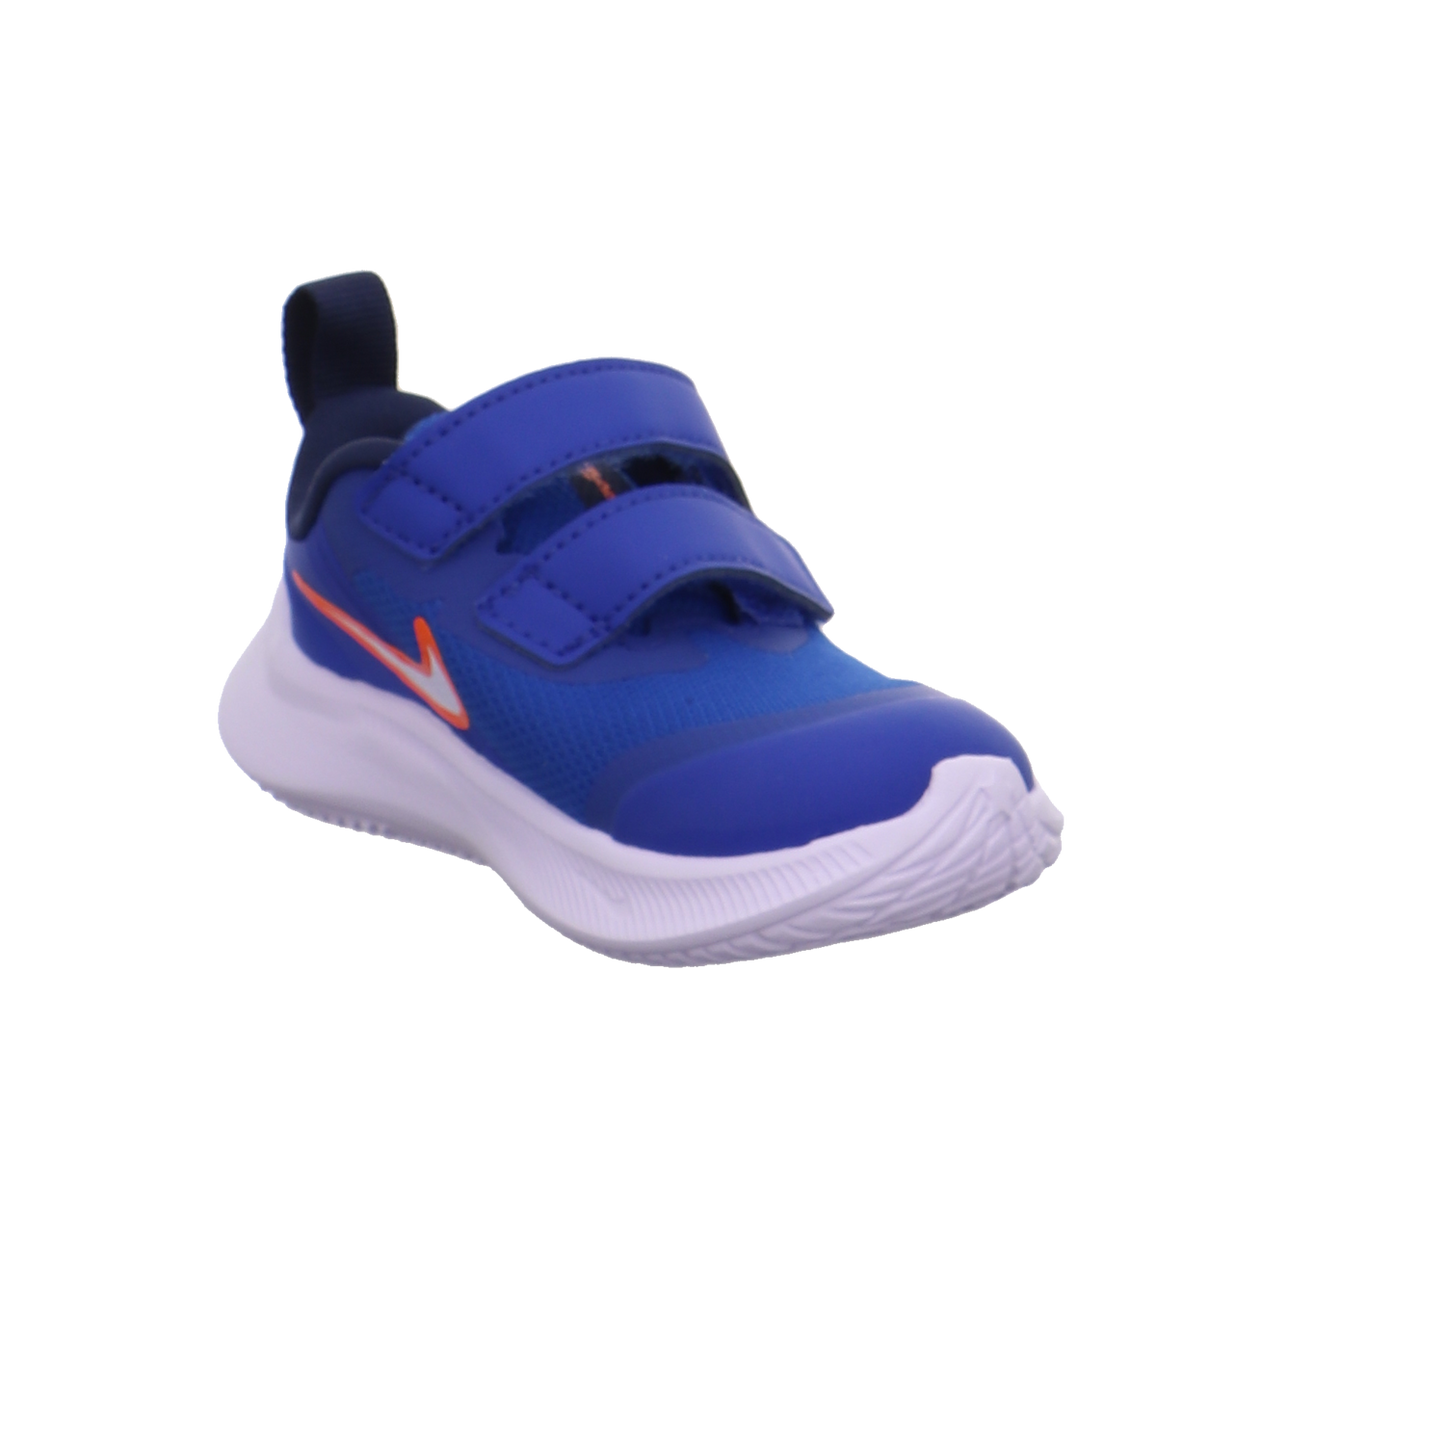 Nike Krabbel- und Lauflernschuhe blau kombi Bild7